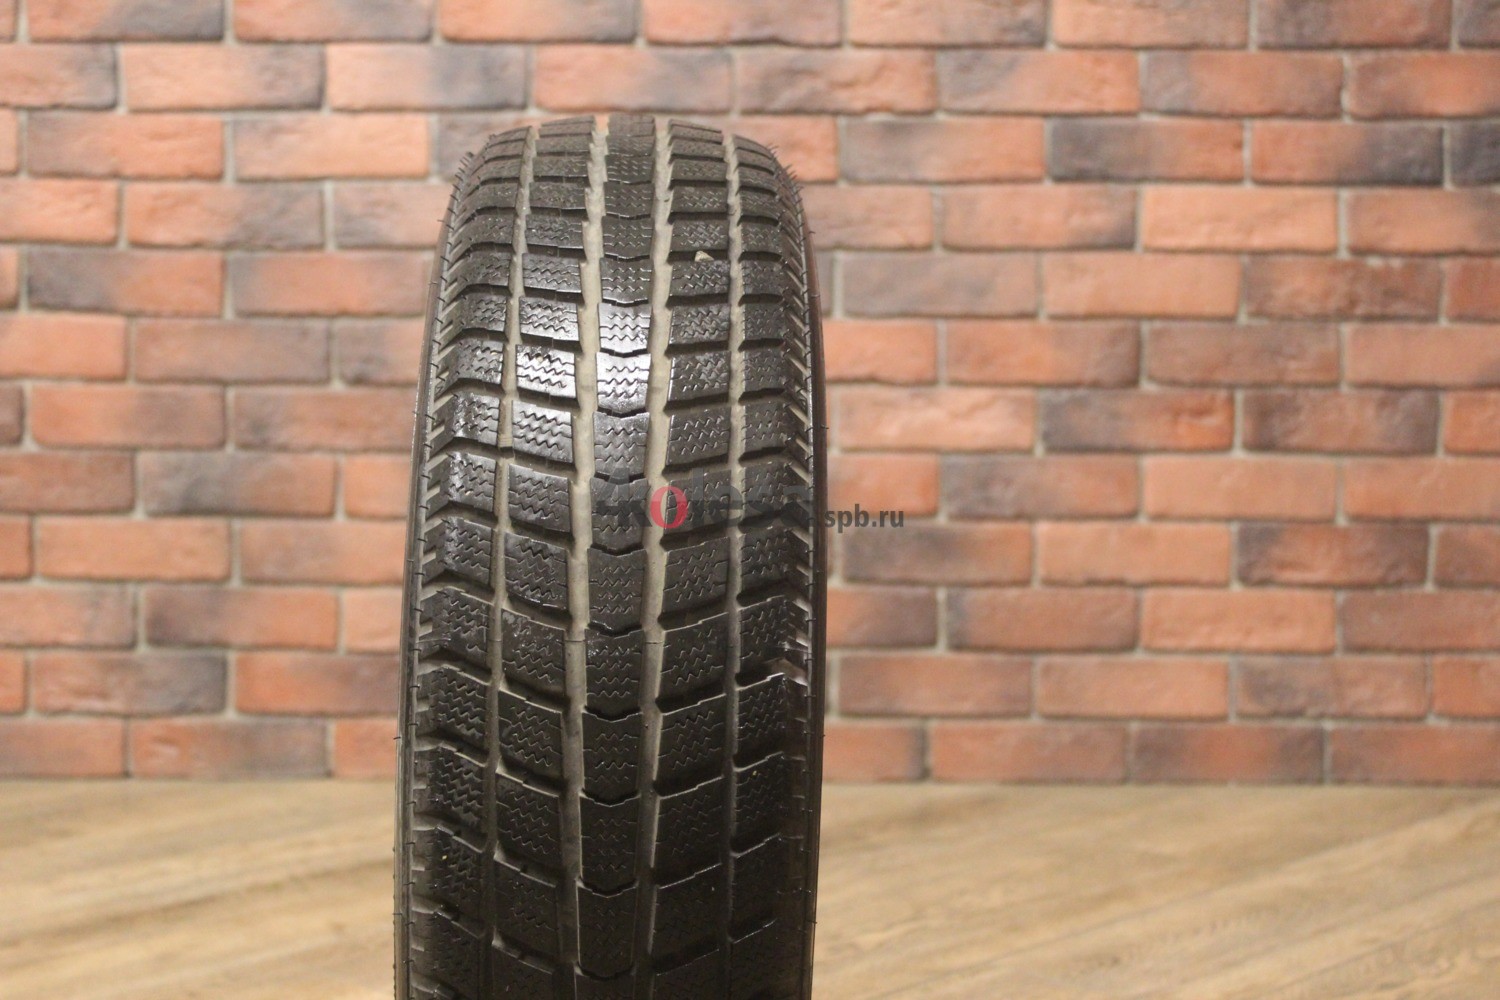 Зимние нешипованные шины R15 185/65 Roadstone EURO-WIN 650 бу Лип. (6-7 мм.)